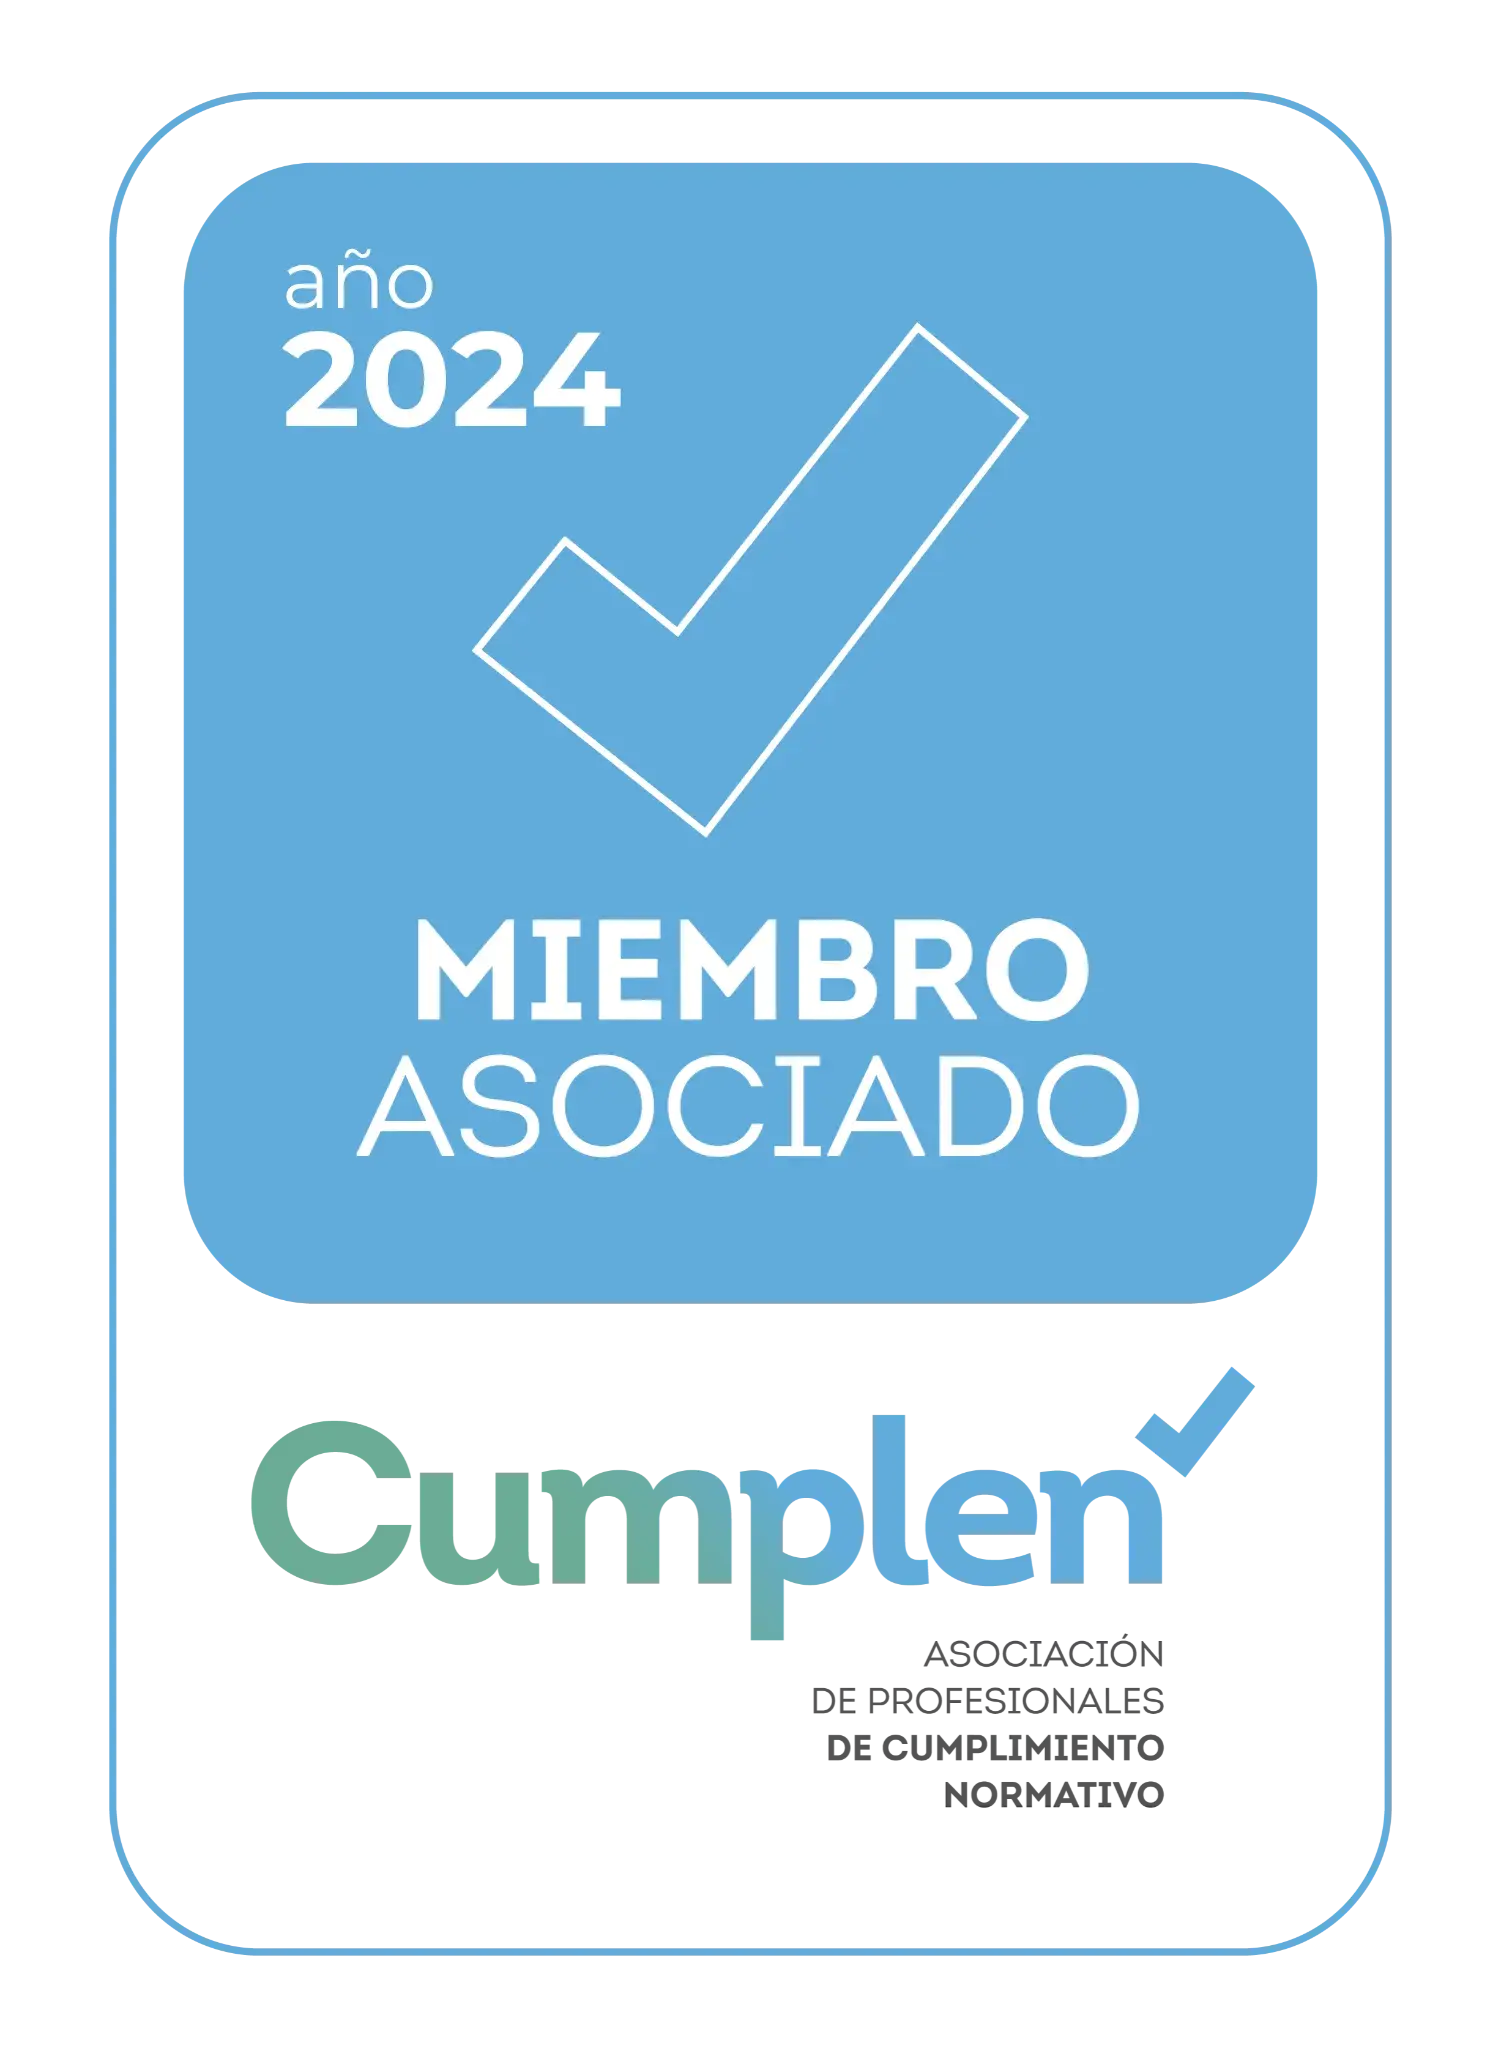 sello-miembro-cumplen-2024-transp-